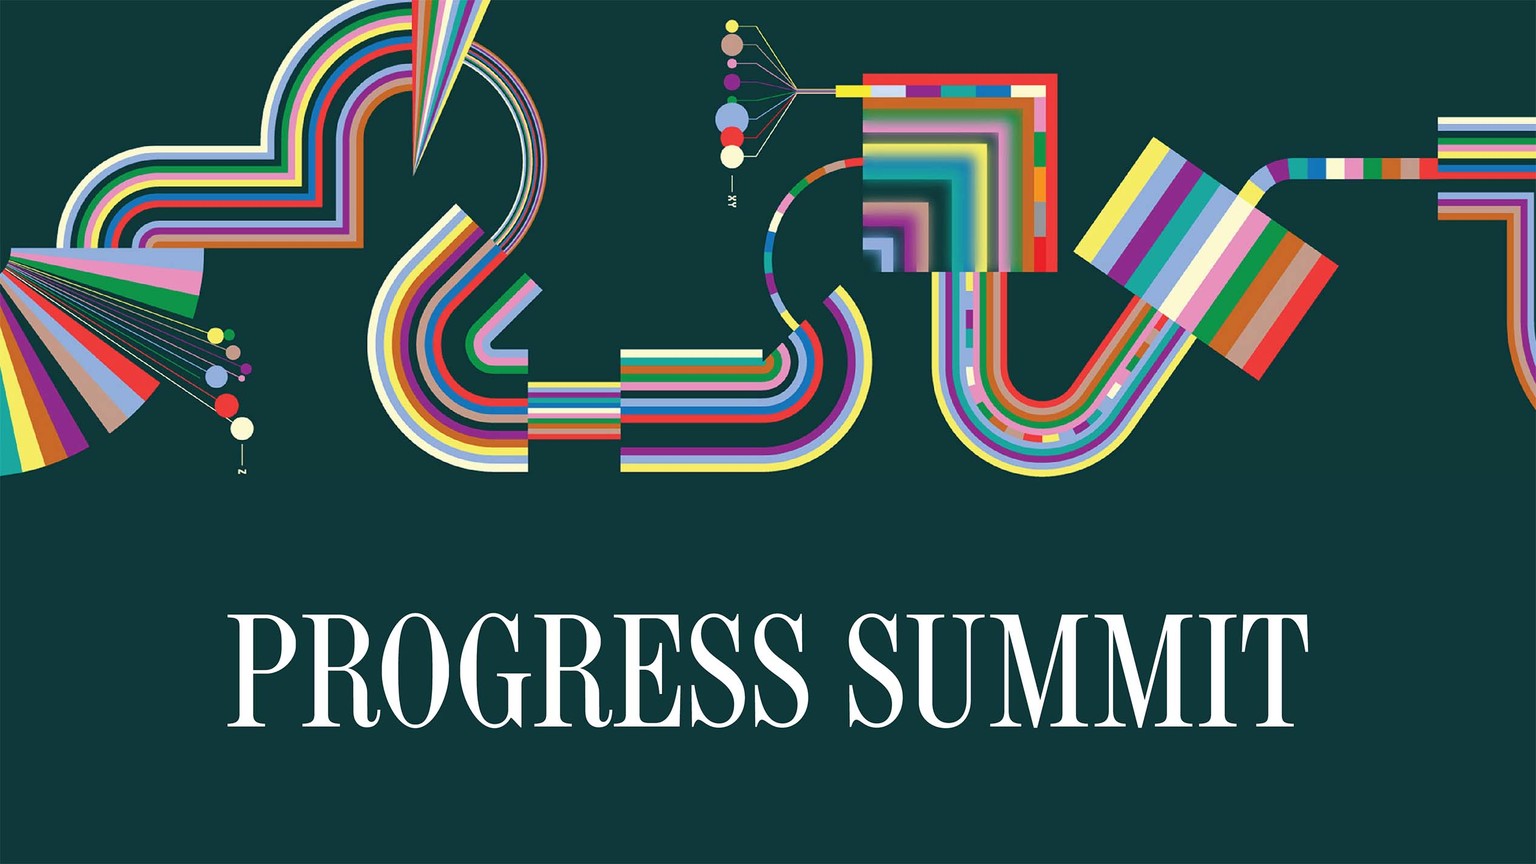 Progress Summit
